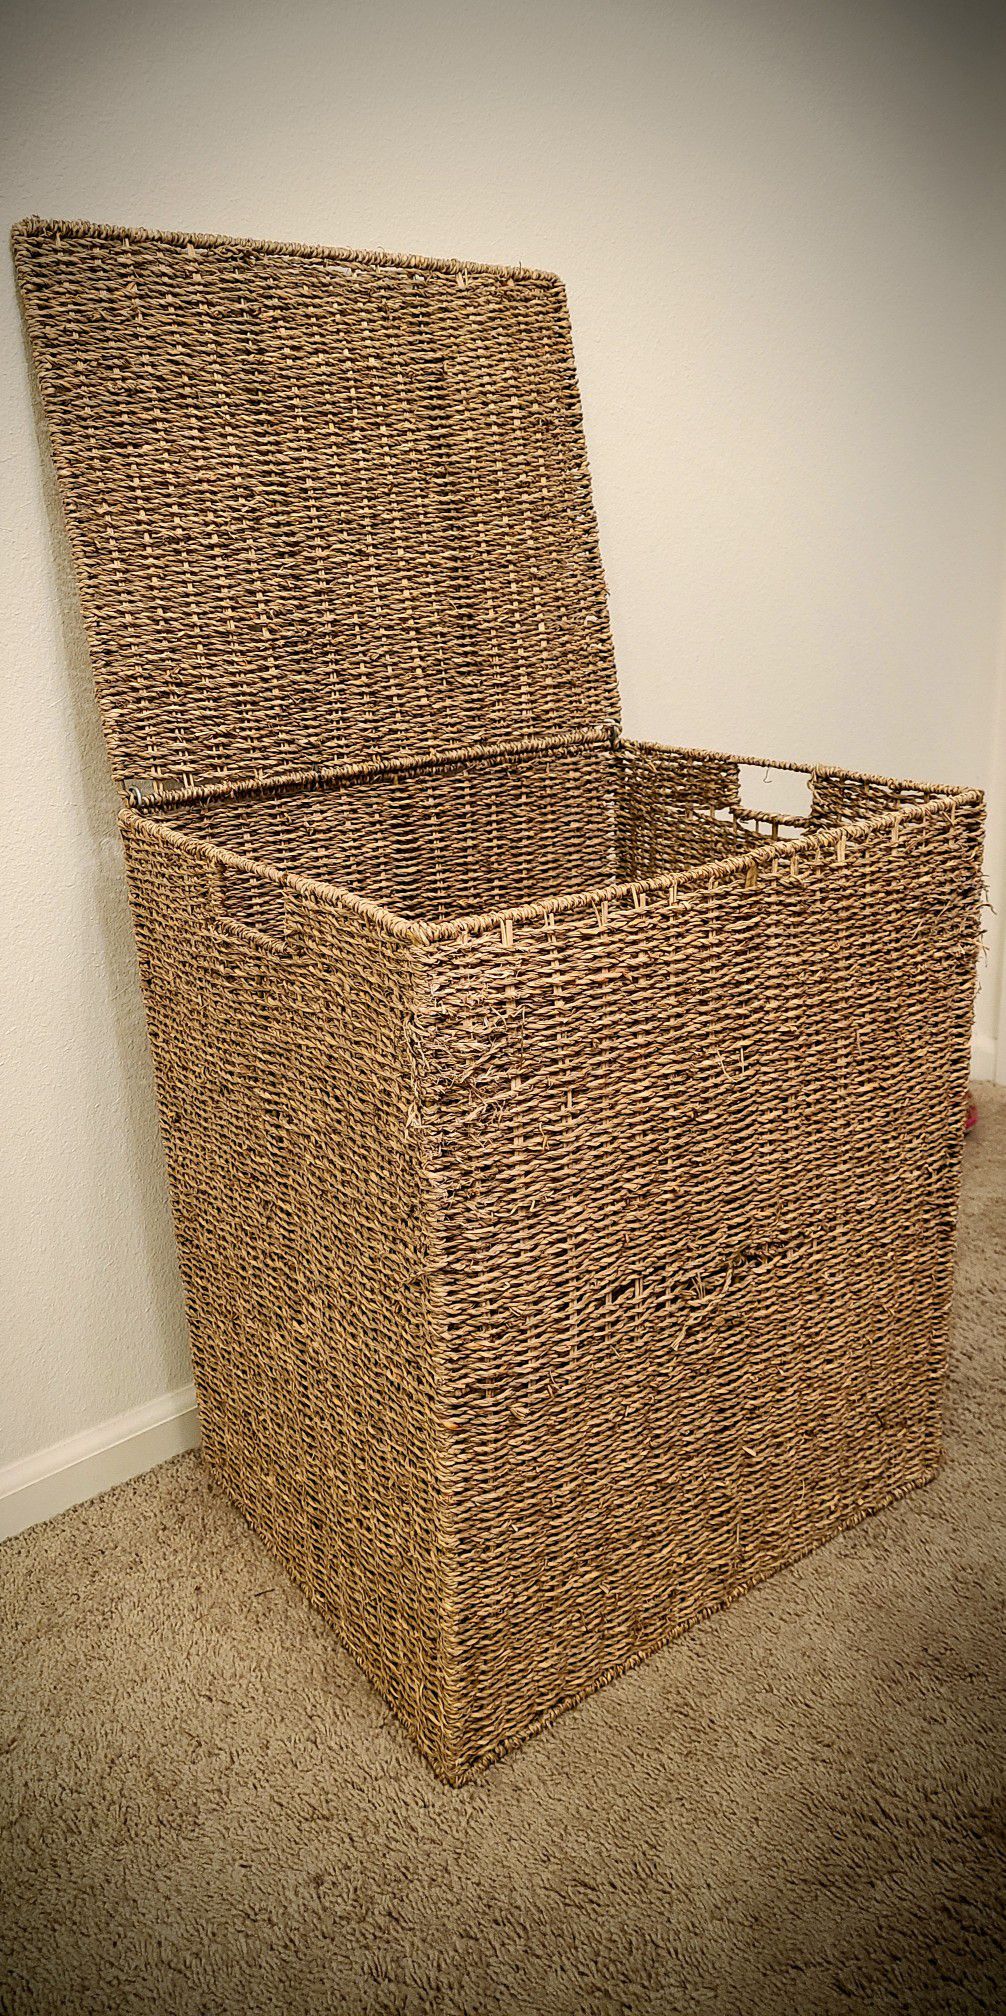 Extra large Wicker laundry basket/hamper